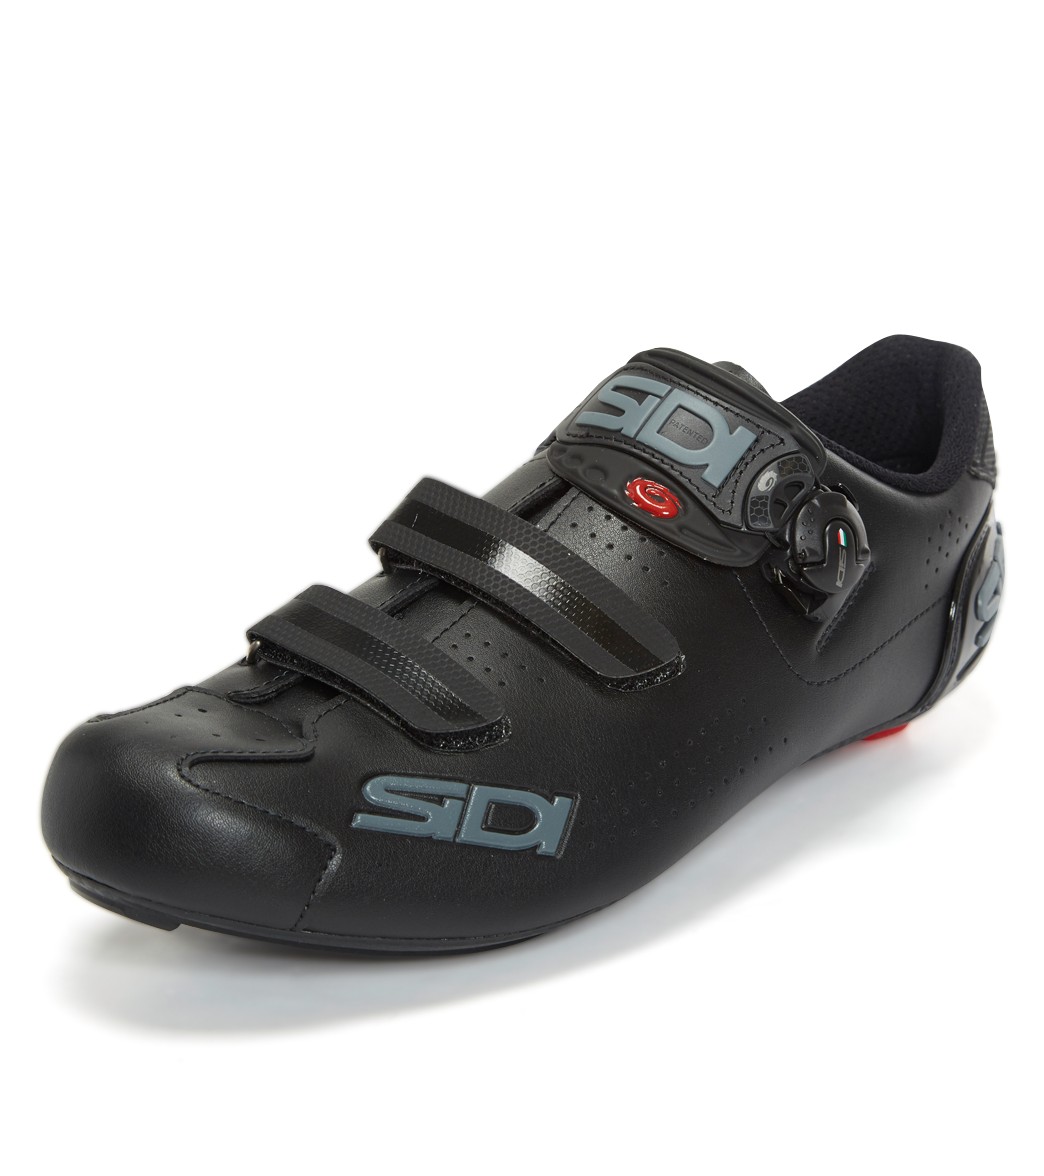 Sidi Men's Alba 2 Tri Cycling Shoes - Black/Black 39.5 - Swimoutlet.com